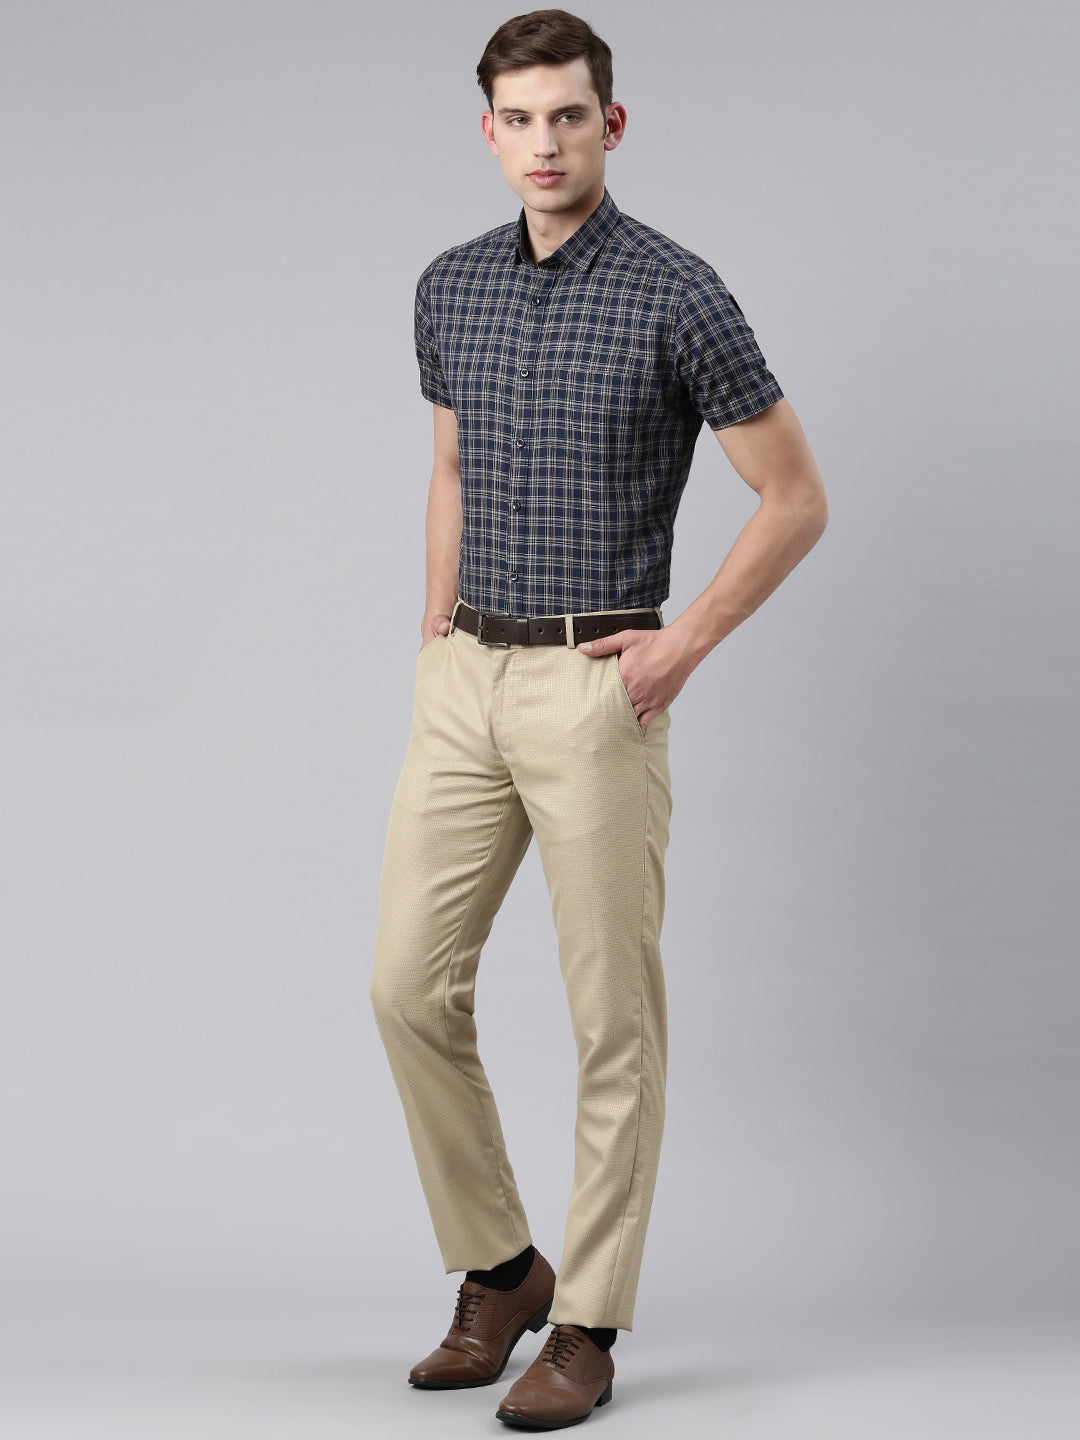 5thanfold Men's Formal Pure Cotton Half Sleeve Checkered Dark Blue Slim Fit Shirt